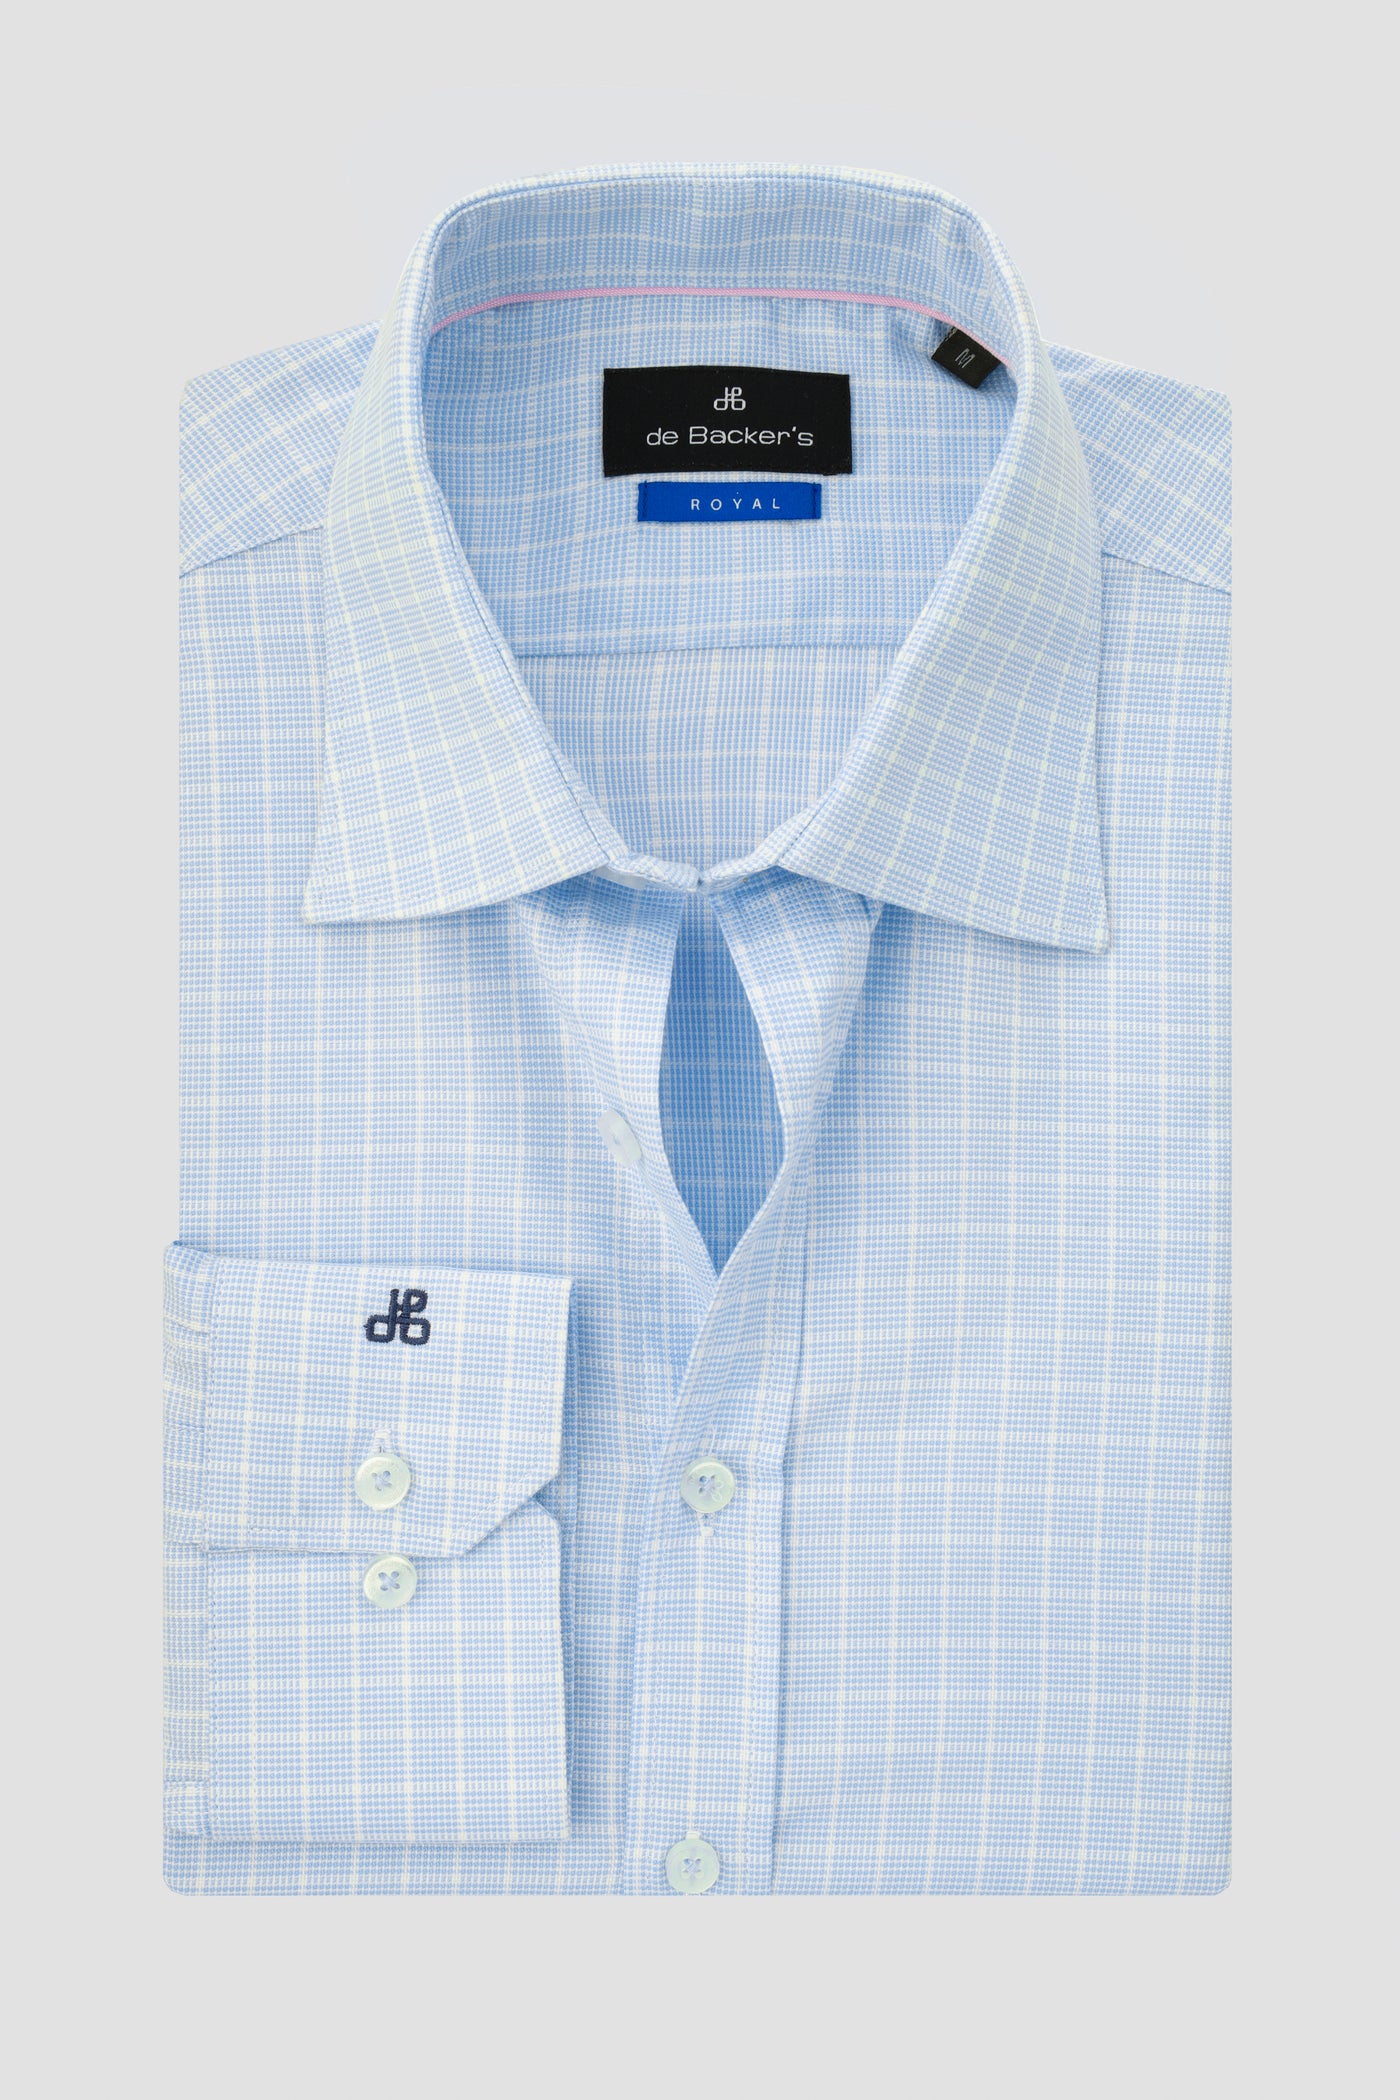 Checked Light Blue & White Smart Casual Shirt